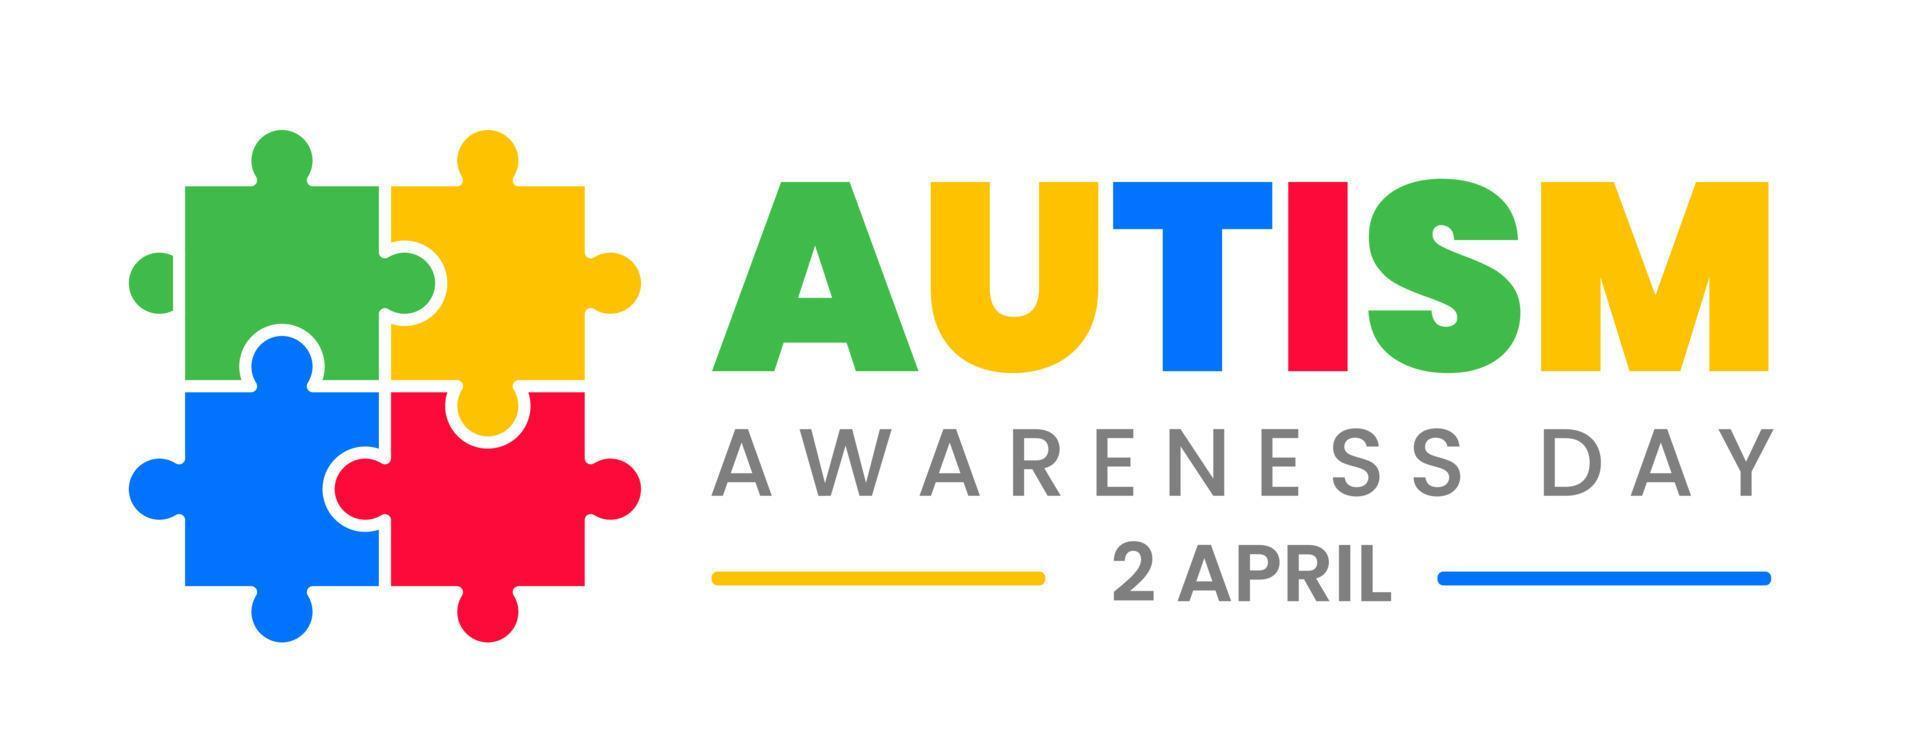 world autism day background. 2 April world autism awareness day background 2022.  world autism day background design vector